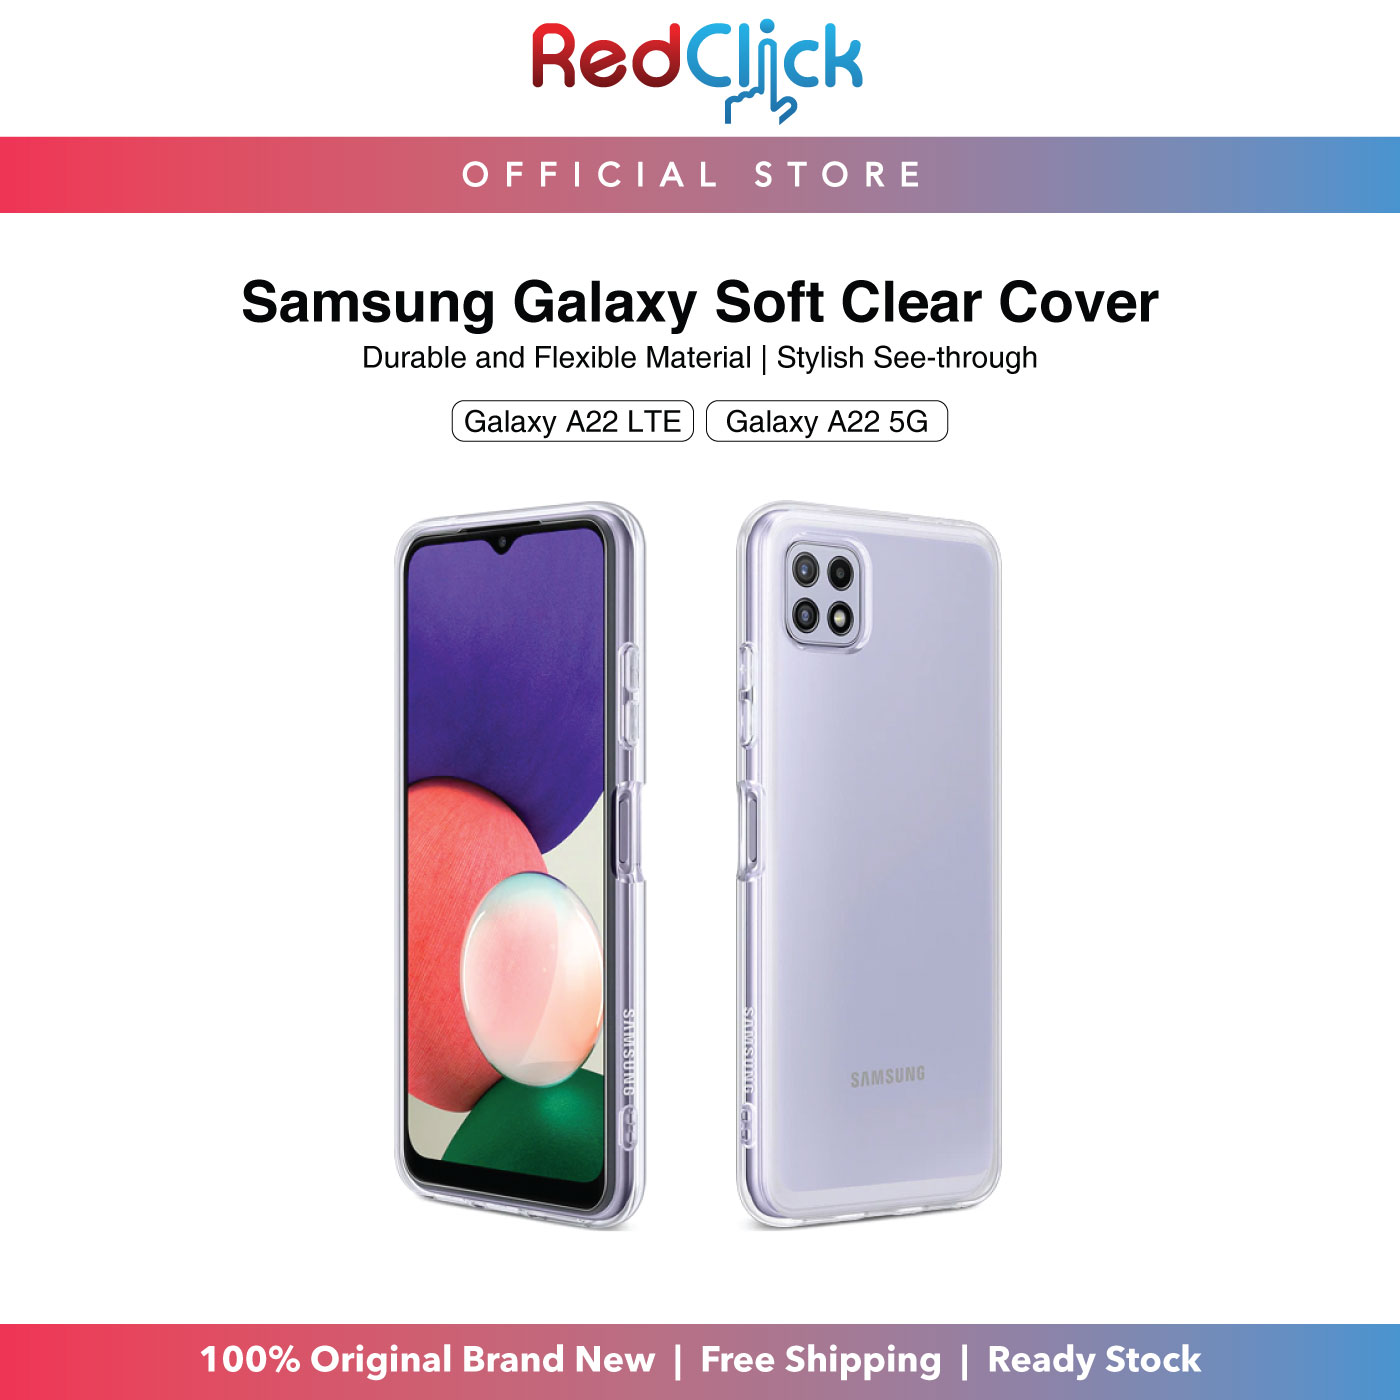 Samsung Galaxy Soft Clear Cover Galaxy A22 LTE / A22 5G